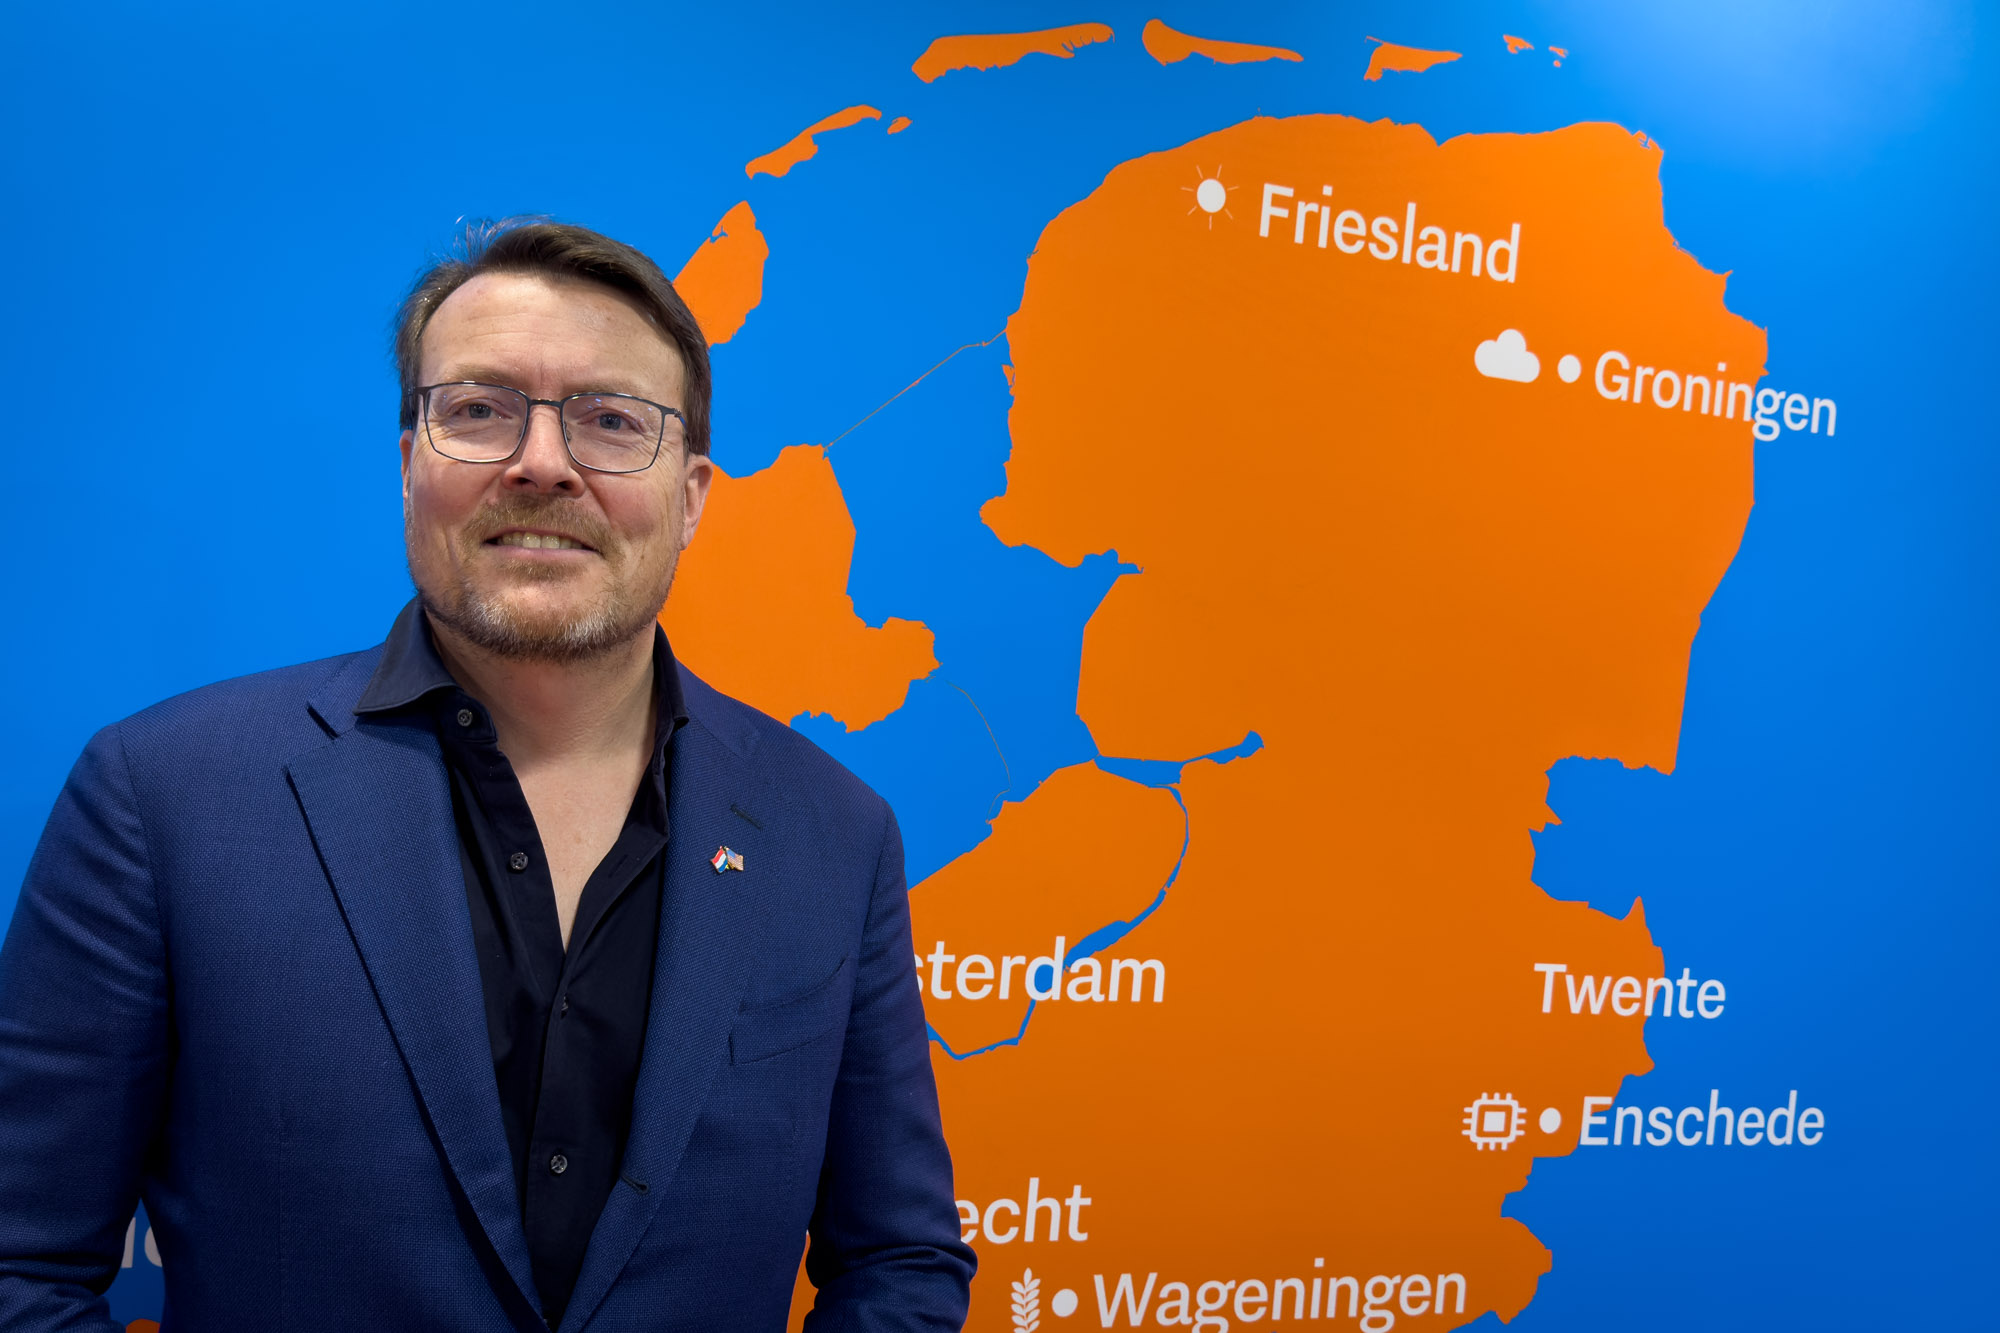 techcrunch.com - Haje Jan Kamps - What's going on in the Dutch startup scene?